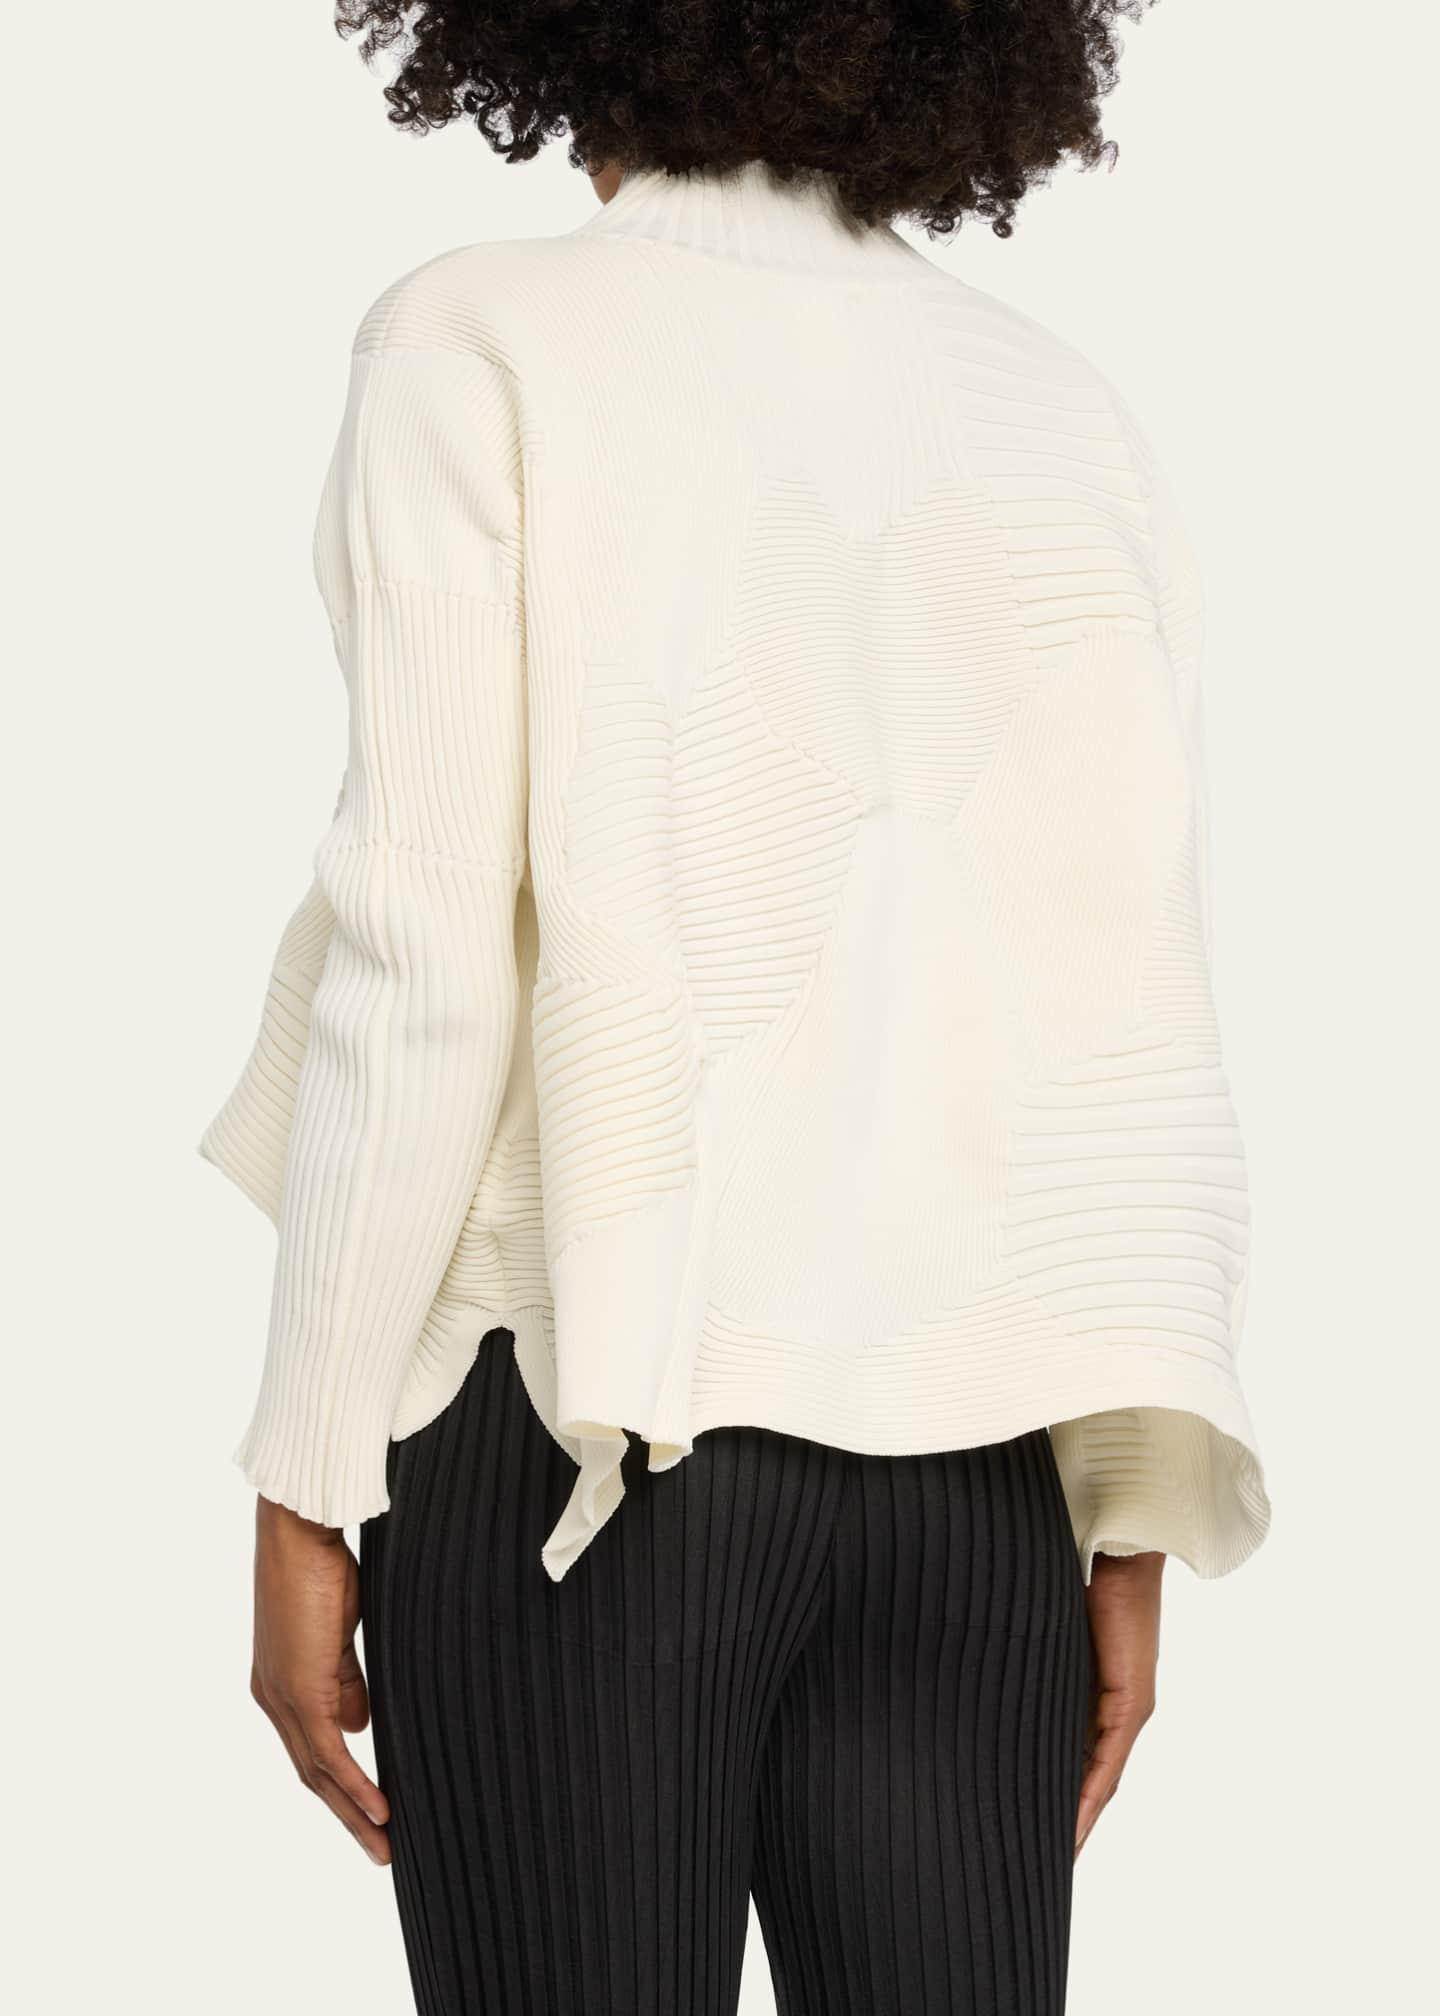 Issey Miyake Kone Kone Asymmetric Knit Sweater - Bergdorf Goodman